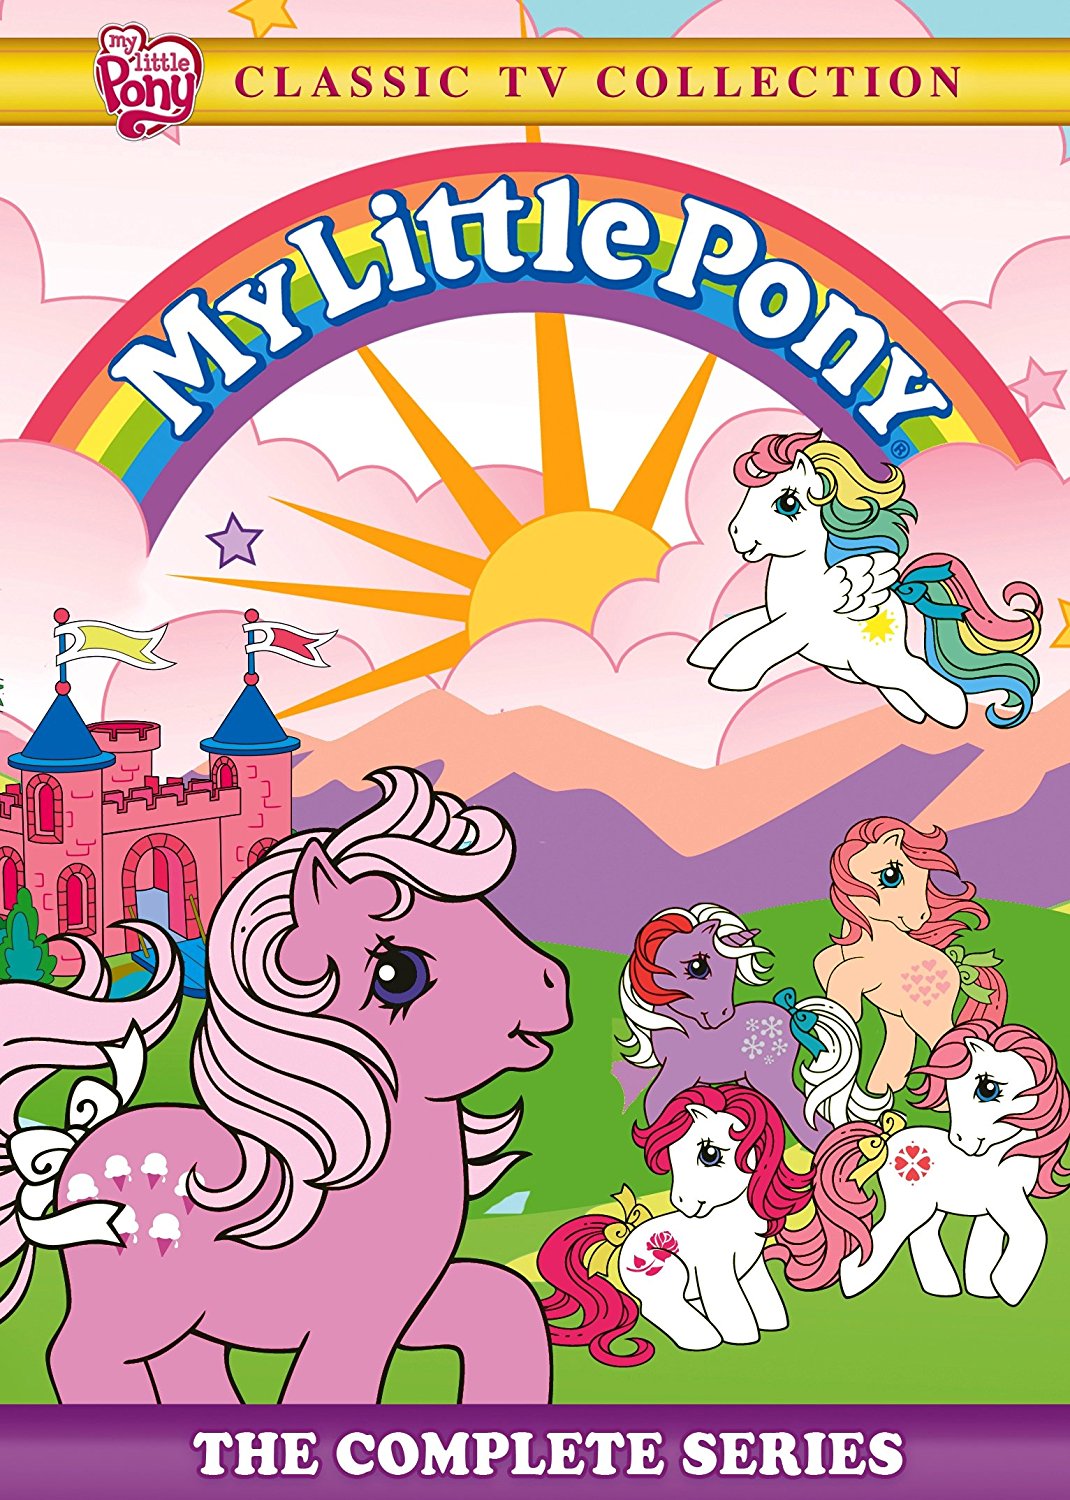 My Little Pony 'n Friends. The Dubbing Database